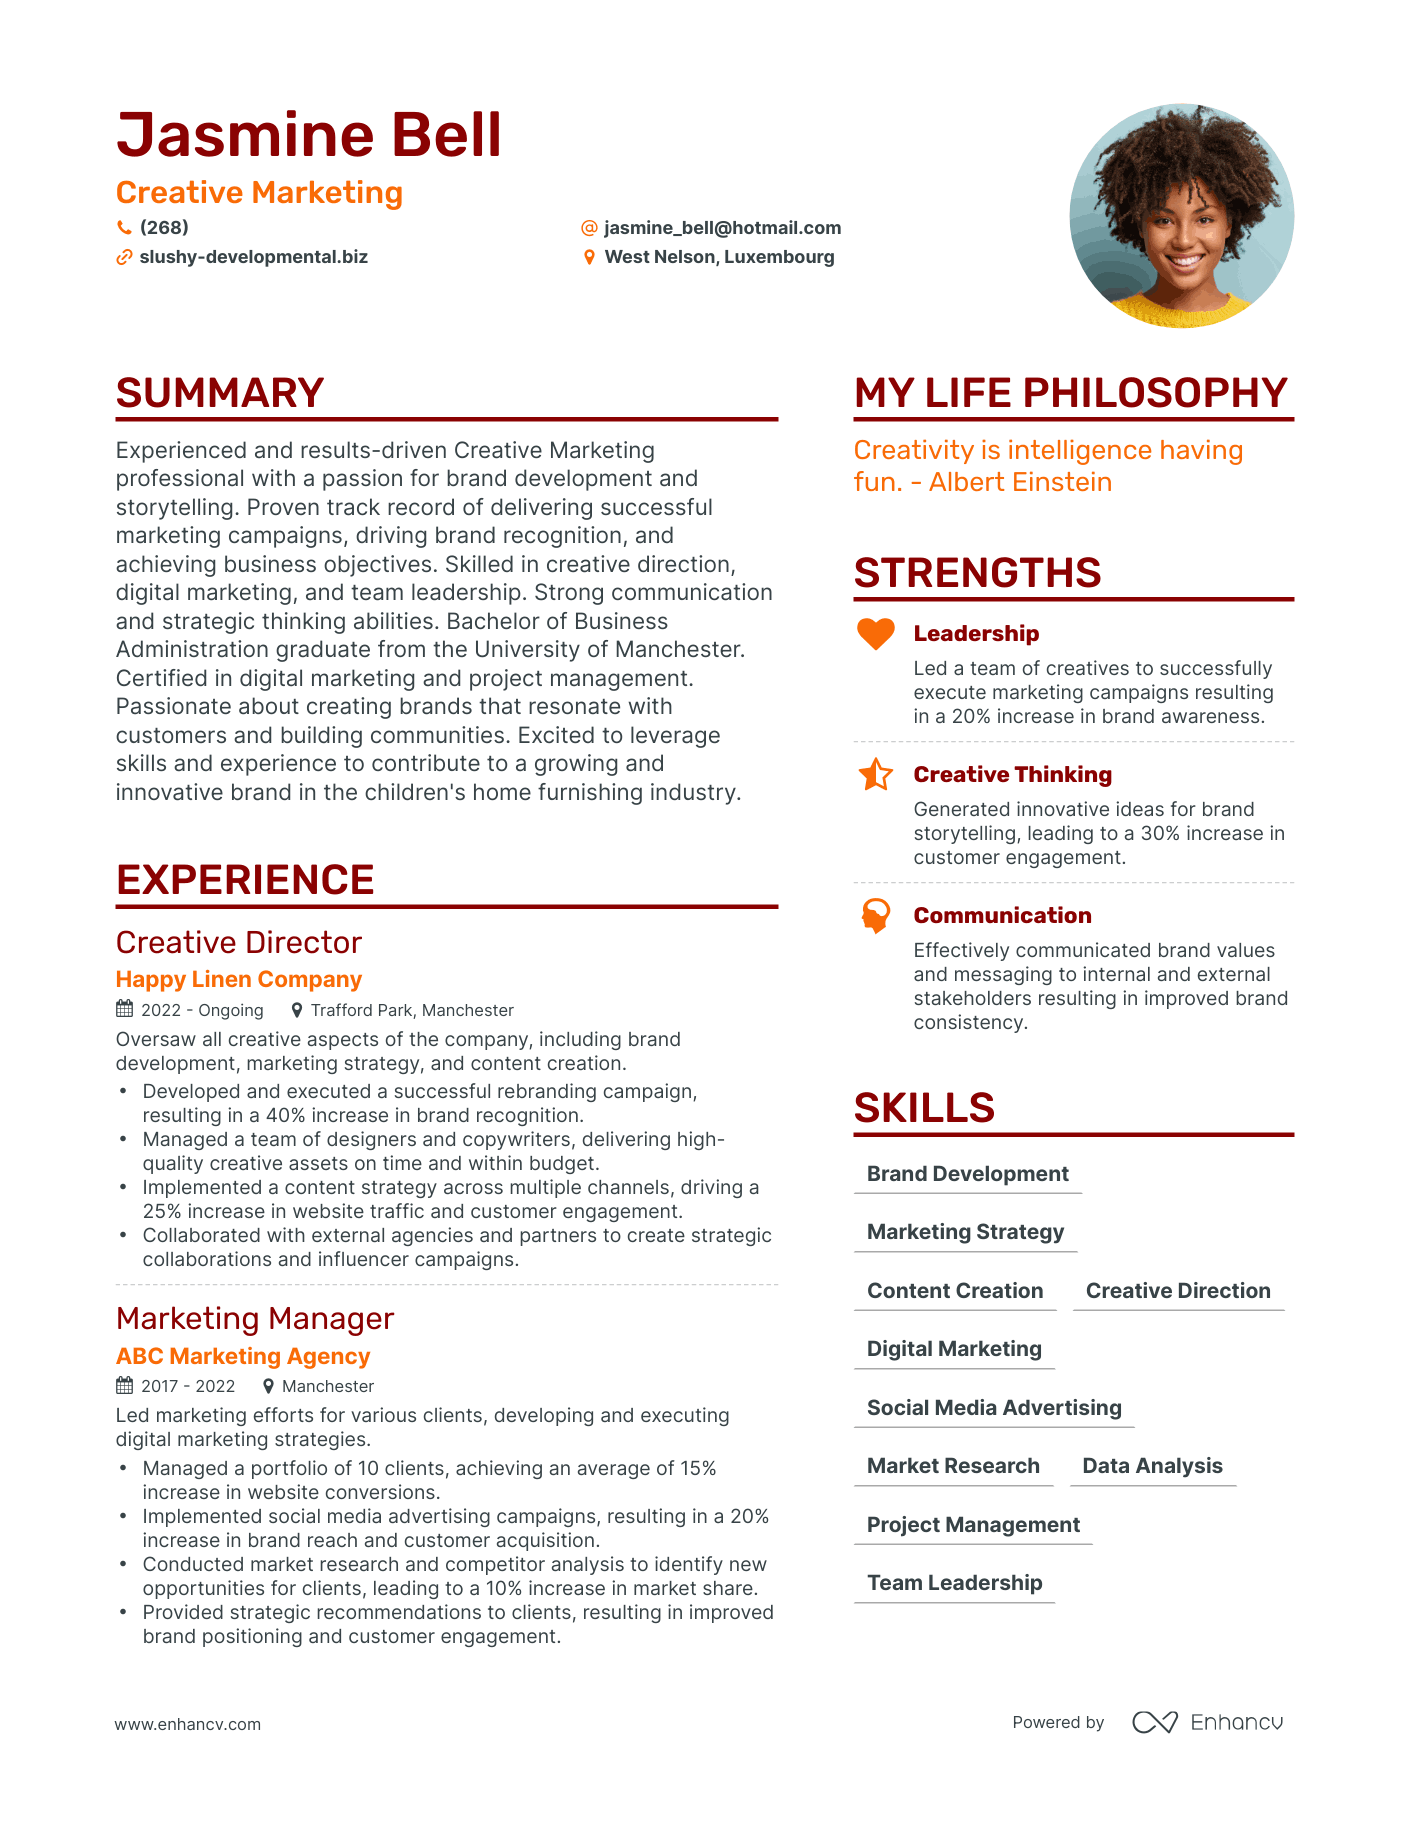 Creative Marketing resume example